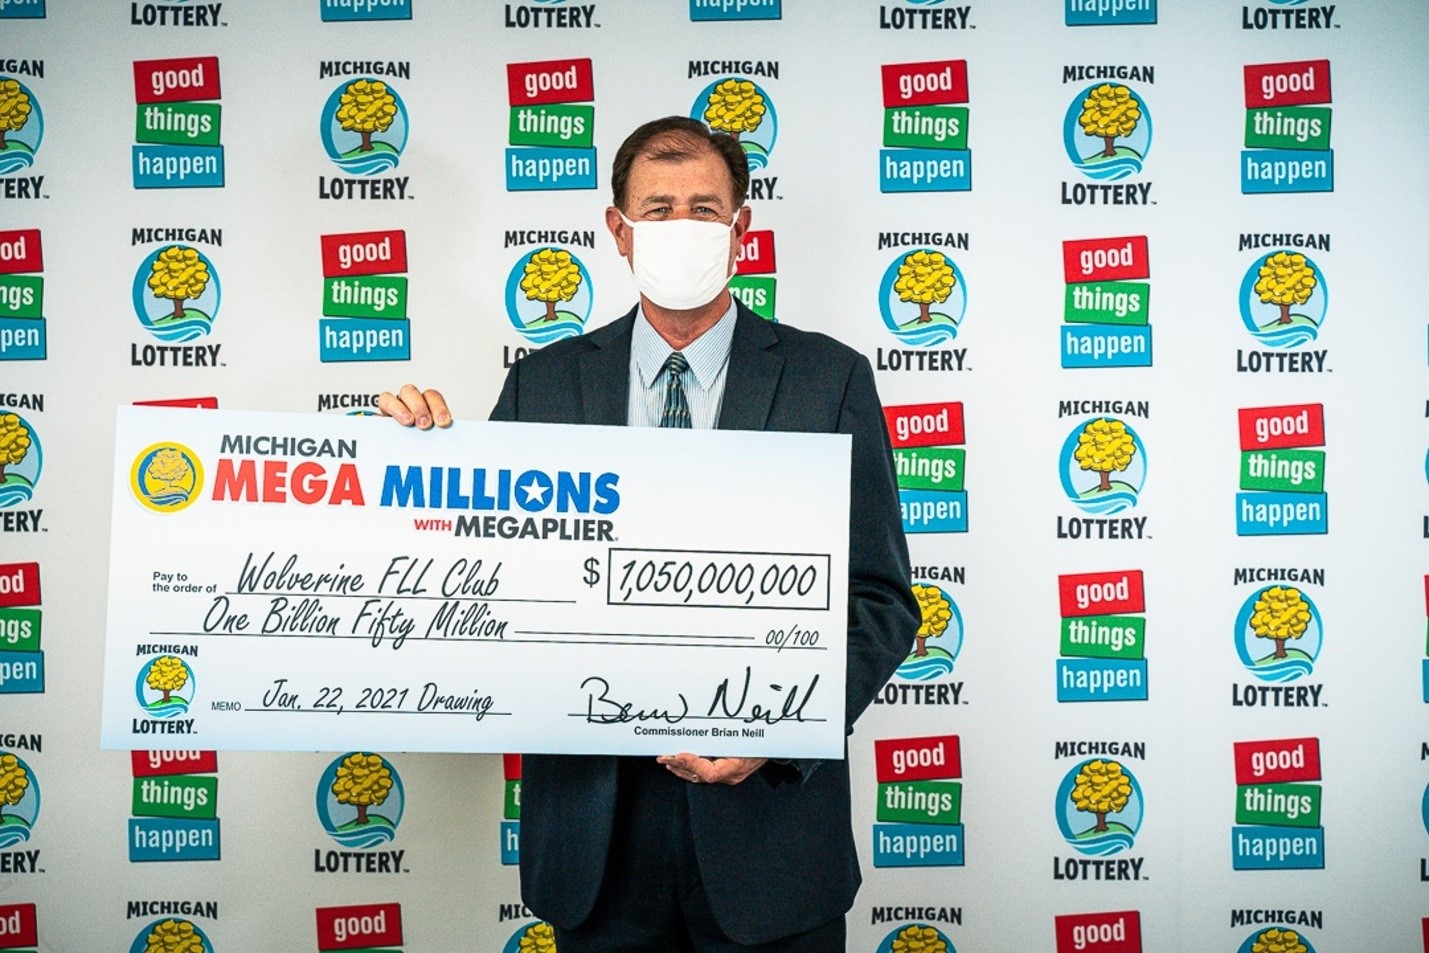 Winners of the MEGA Millions $ 1 billion prize were announced